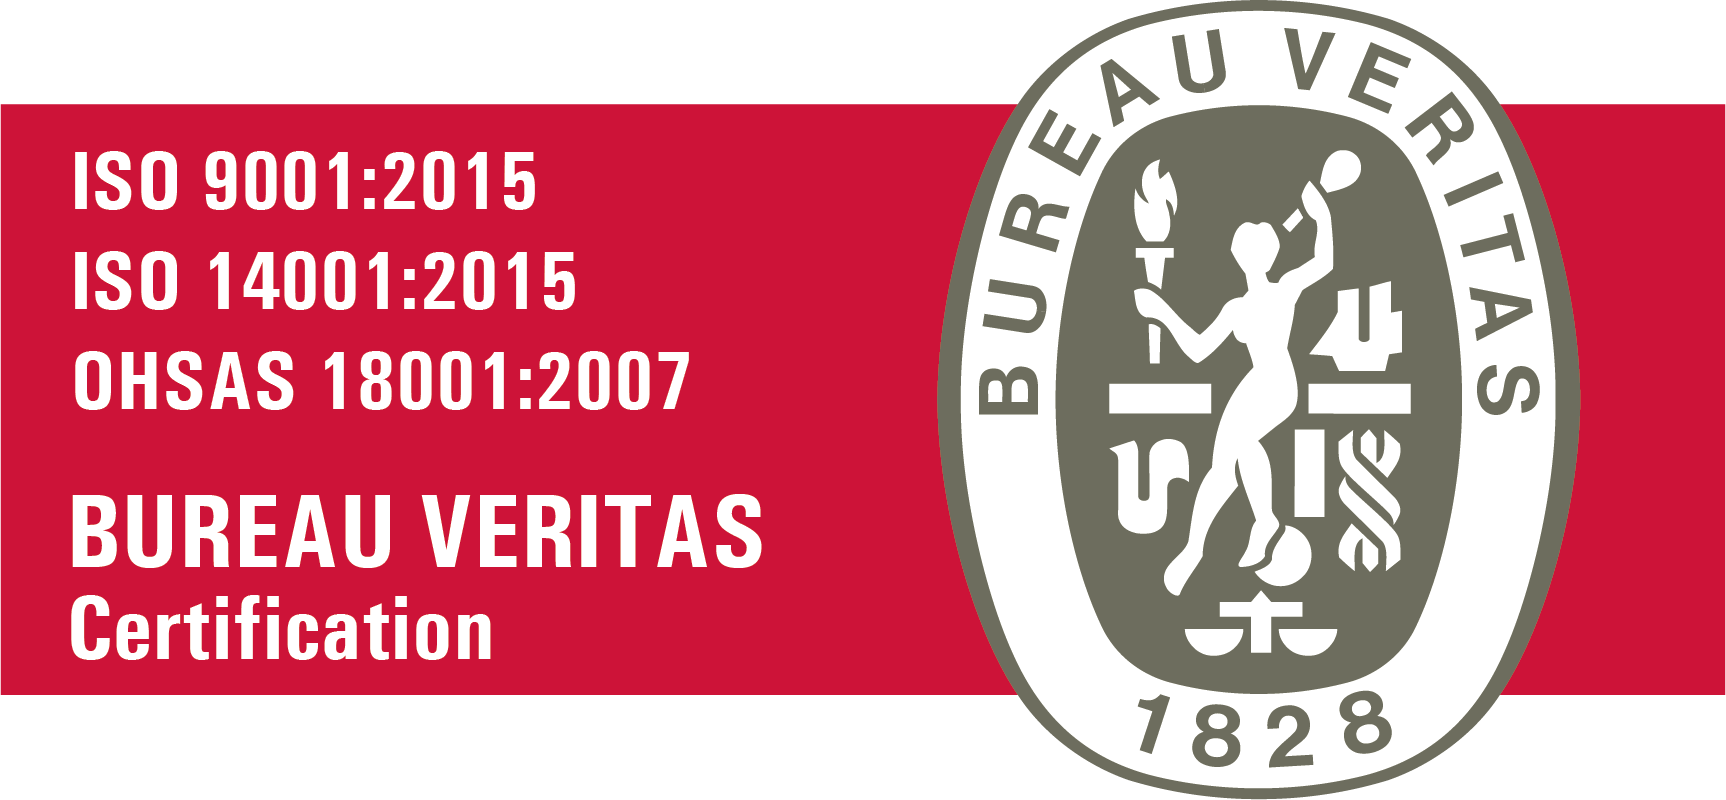 Bureau Veritas Certification ISO 9001:2015 ISO 14001:2015 OHSAS 18001:2007